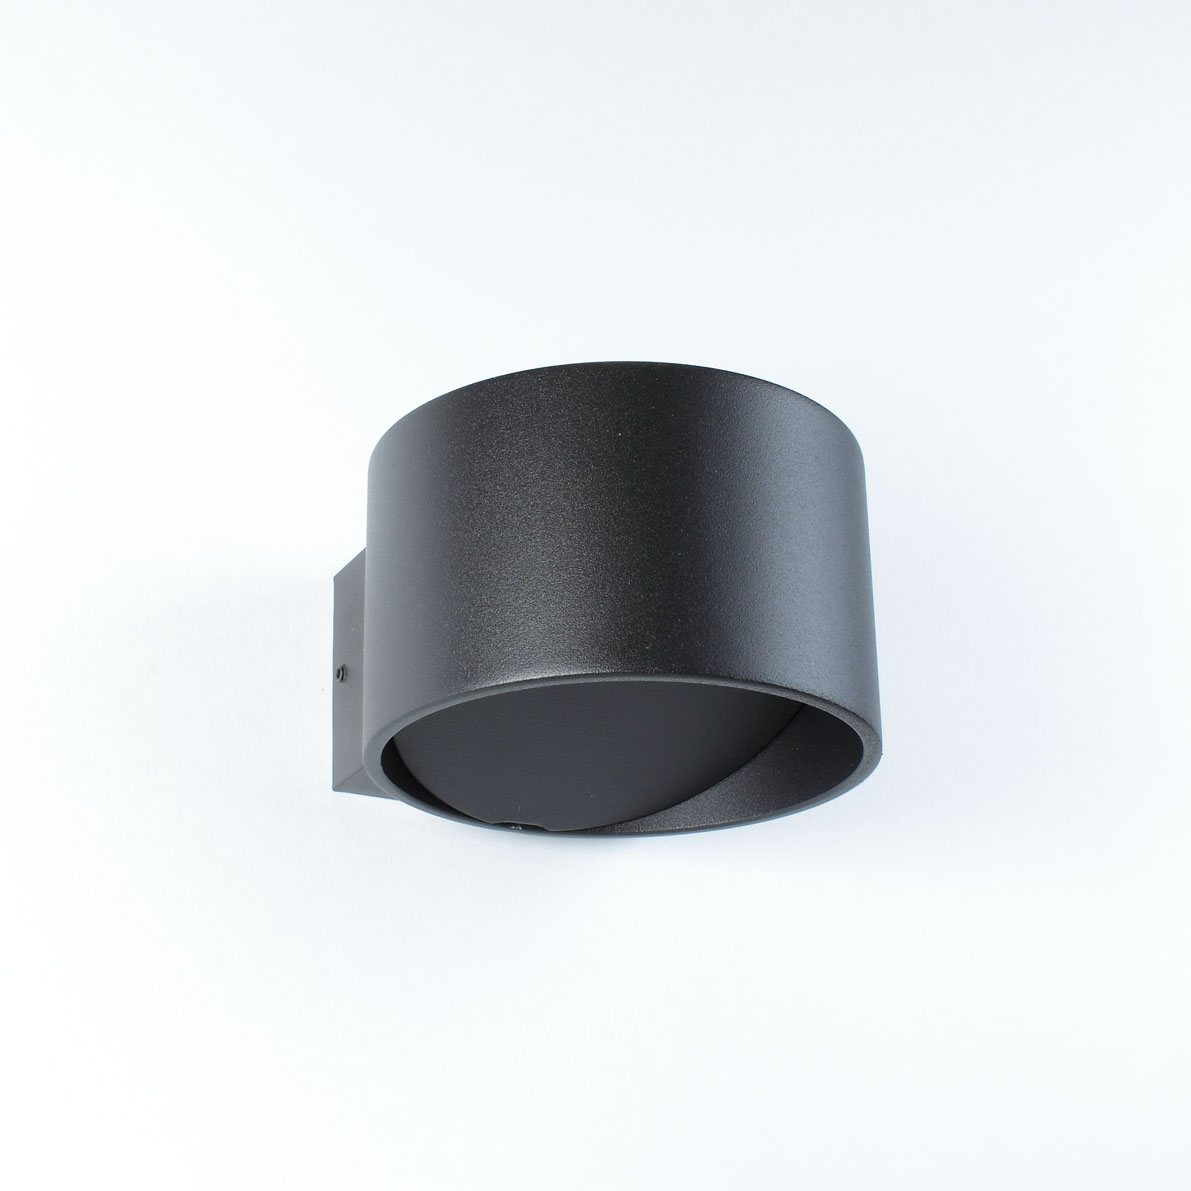 Светодиодные светильники Светильник настенный светодиодный JH-BD-B04 DHL27 (220V, 7W, черный корпус, warm white)